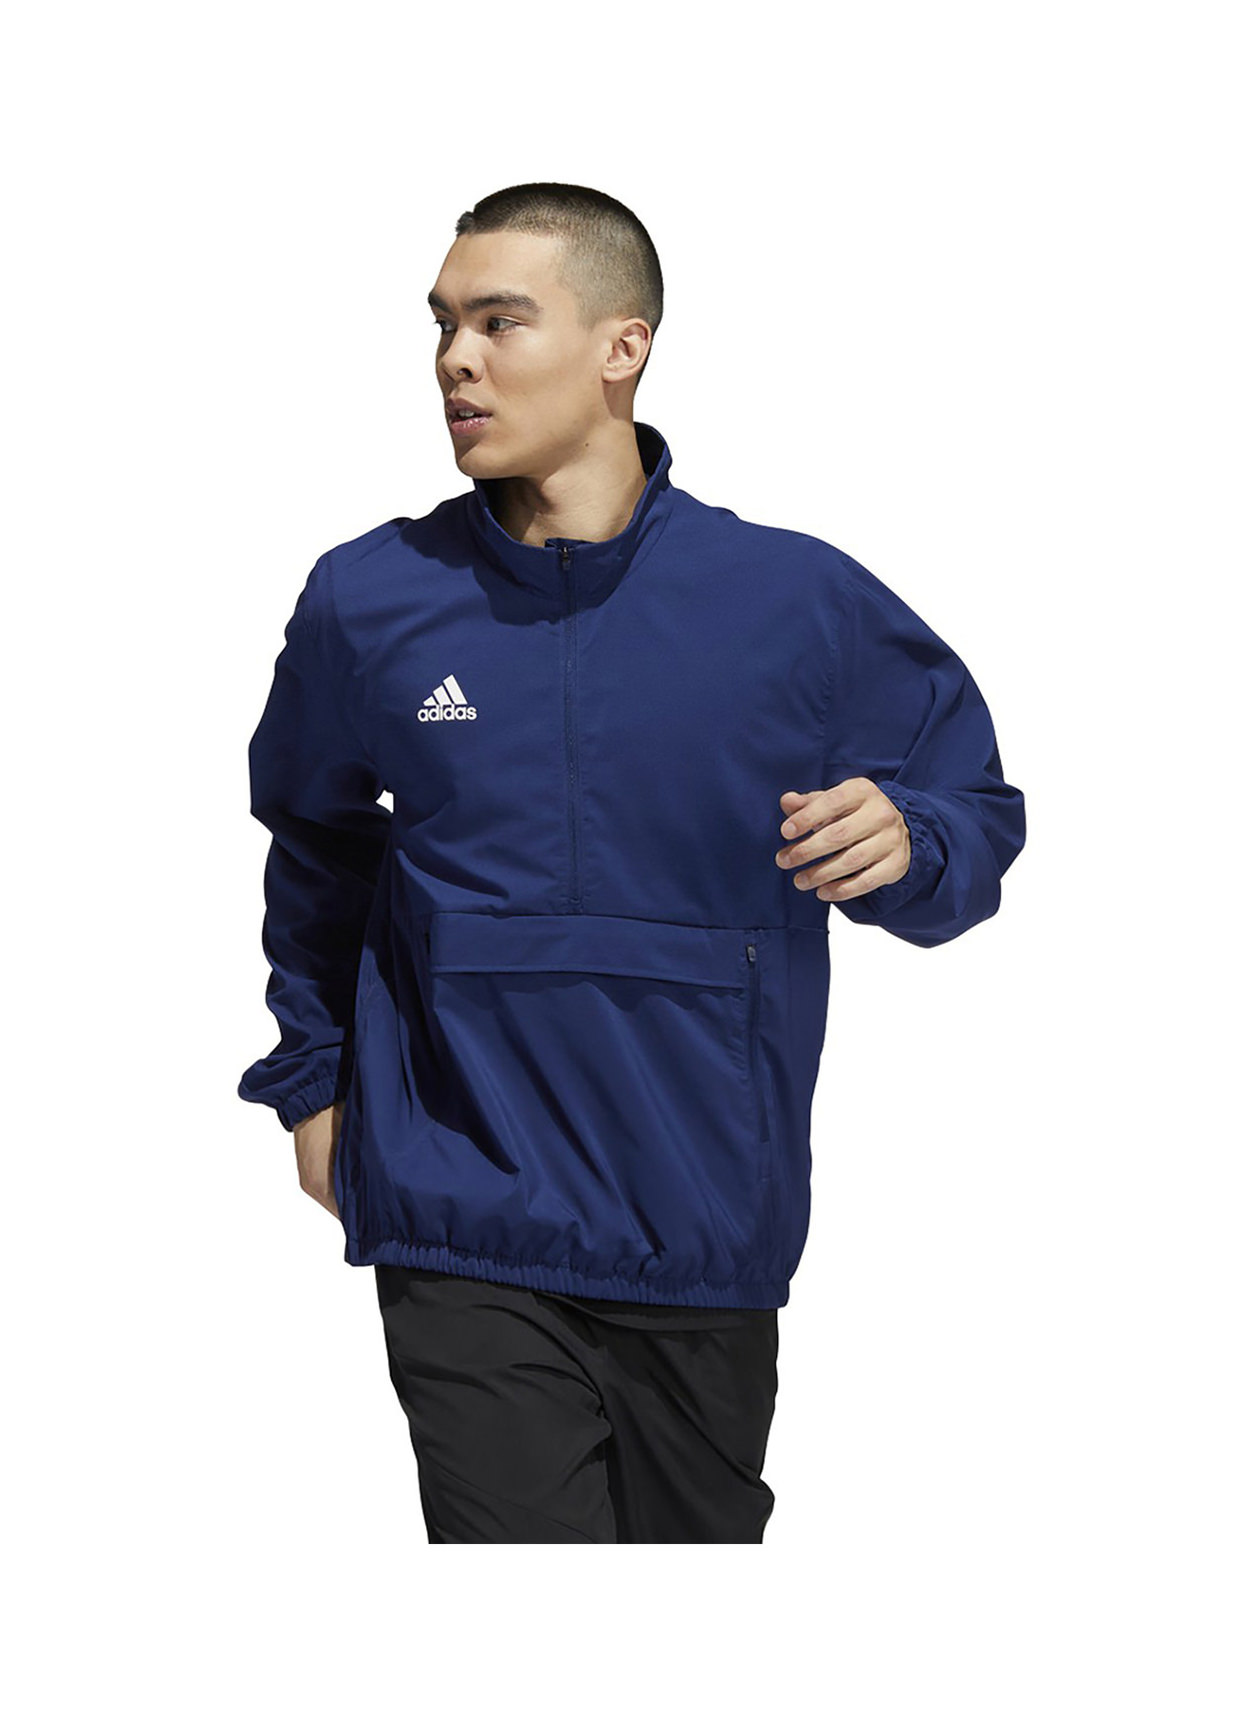 Adidas Men's Team Navy Blue / White Stadium Quarter-Zip Jacket